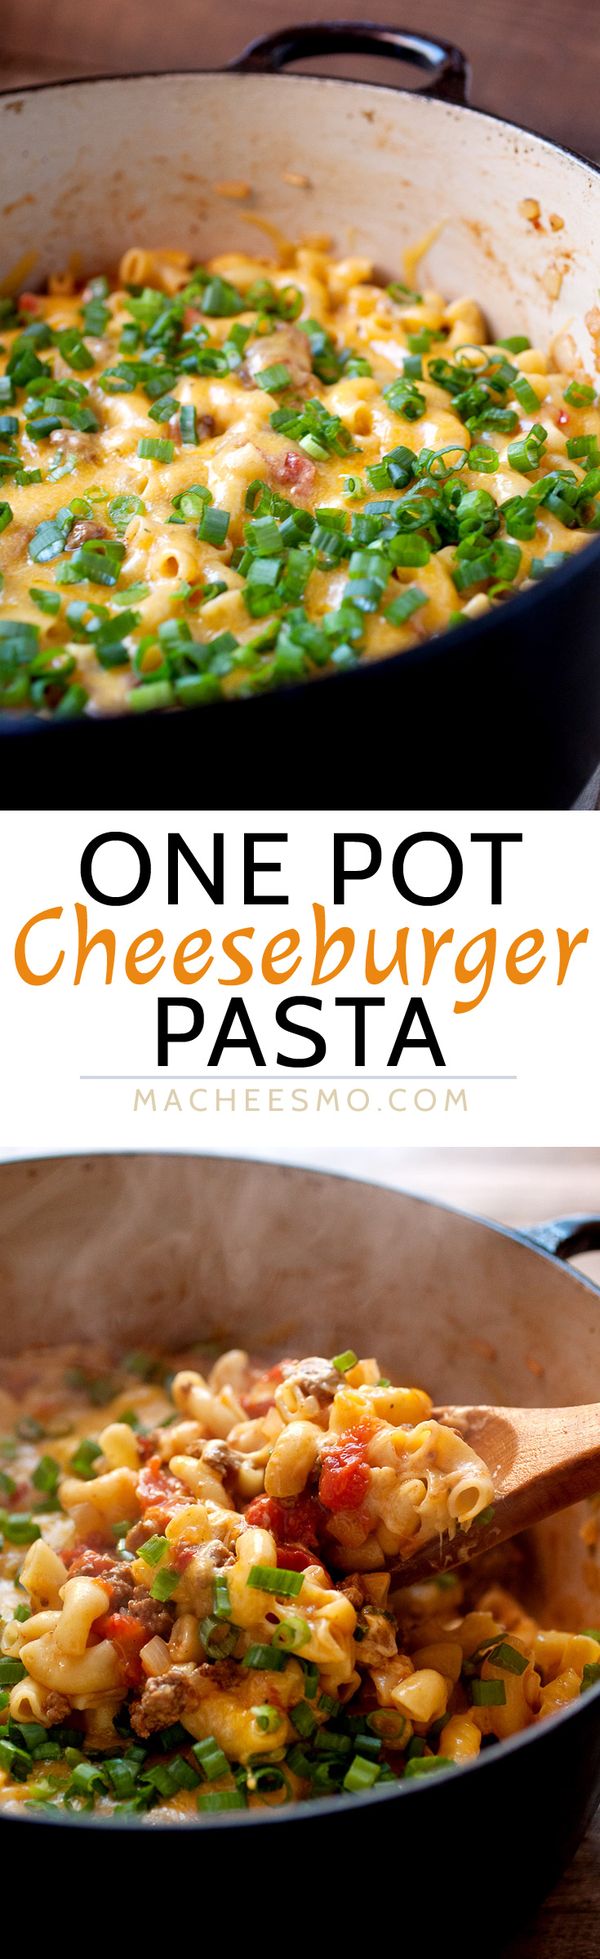 One Pot Cheeseburger Pasta